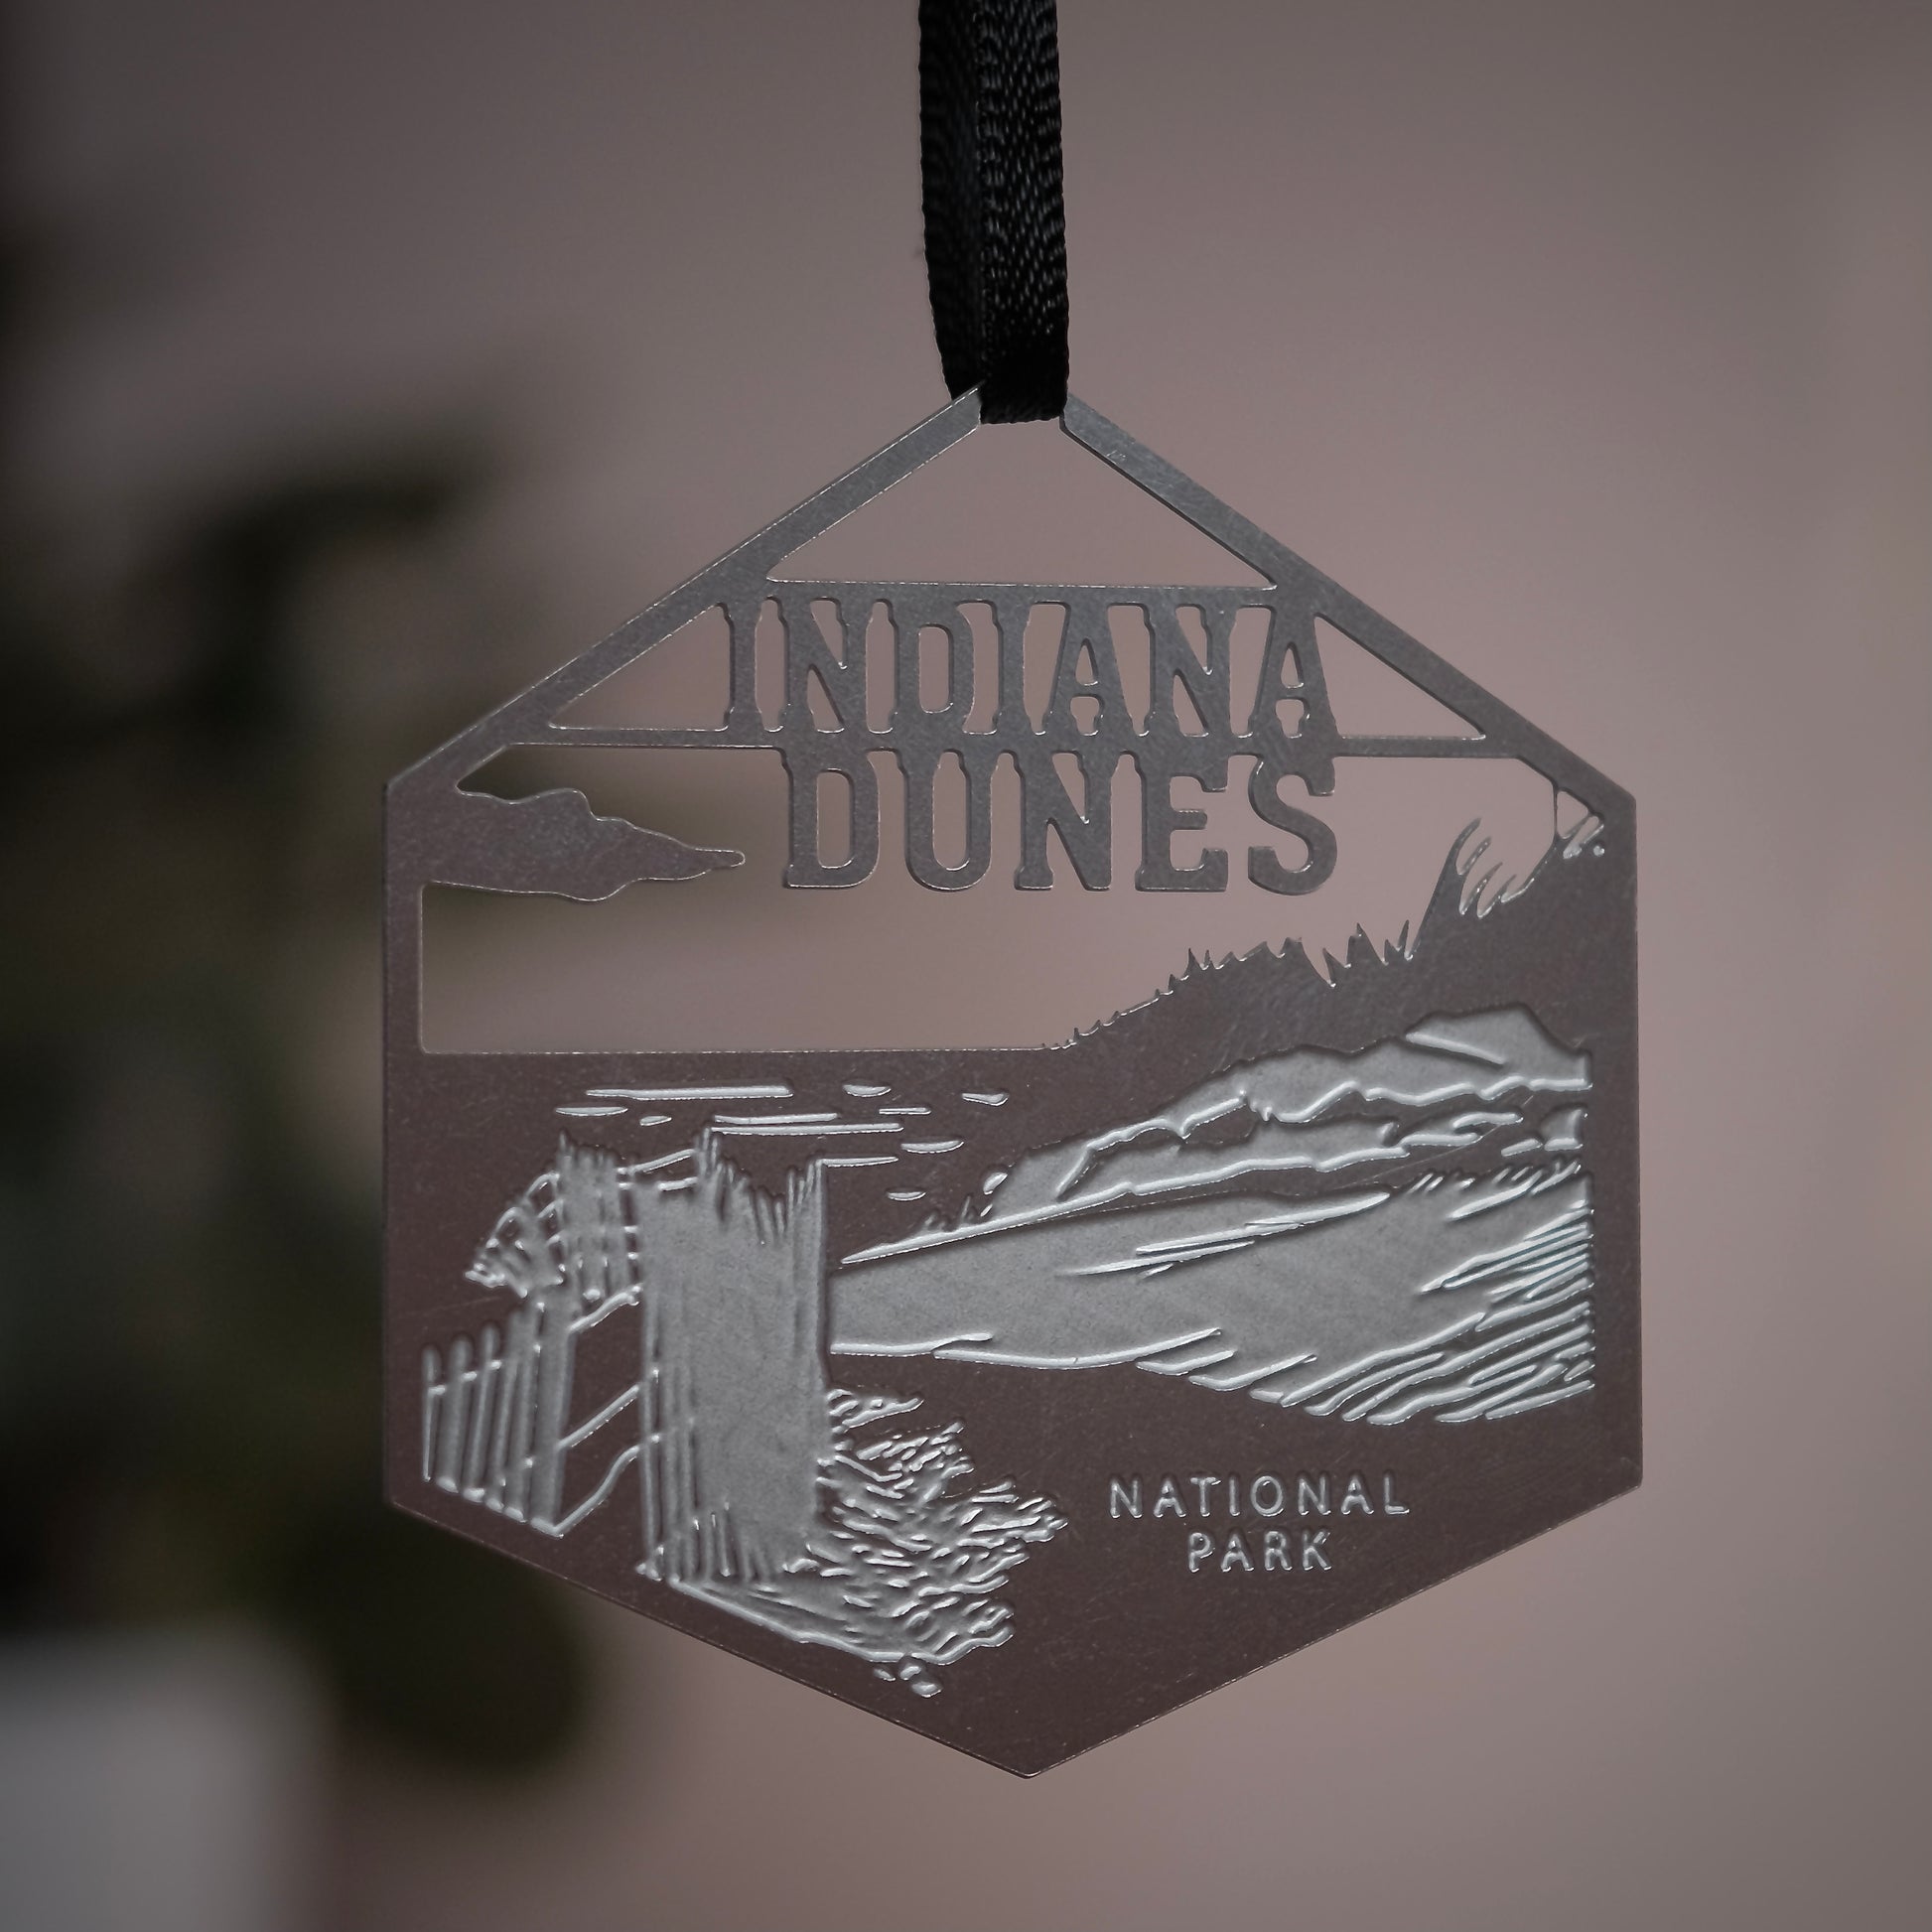 National Park Gift - Indiana Dunes National Park Ornament